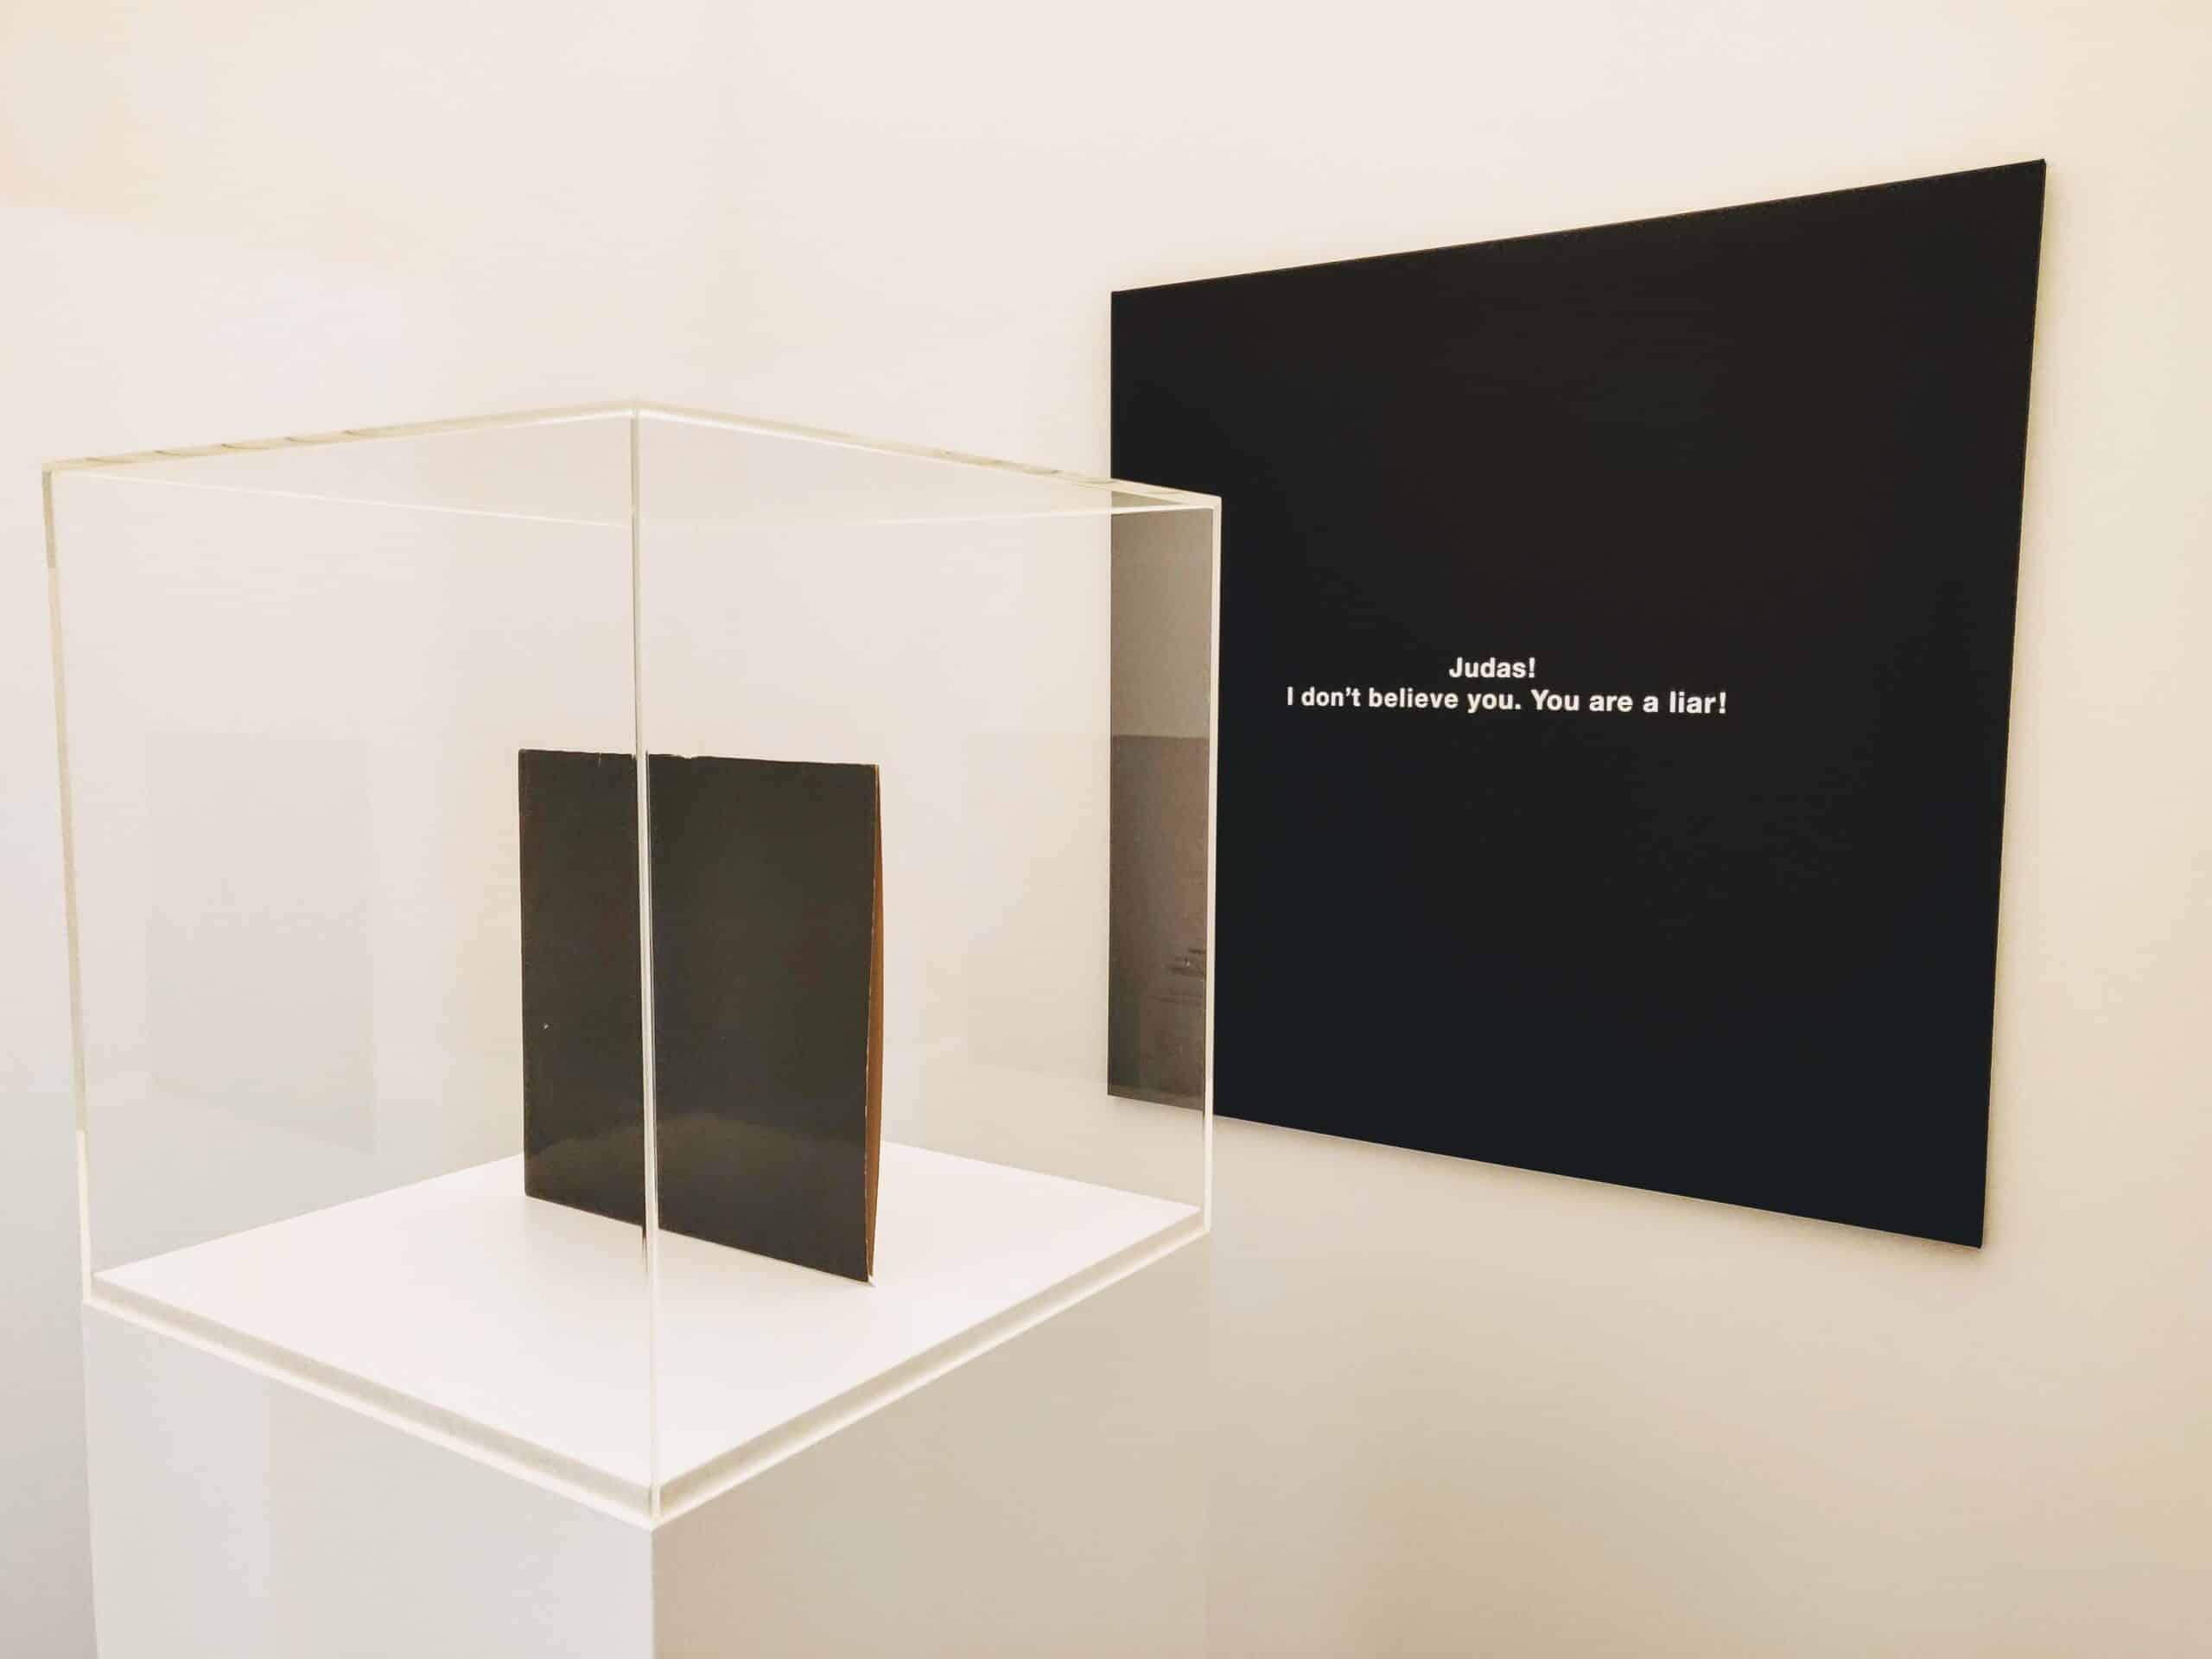 Black Album / White Cube in de Kunsthal Rotterdam